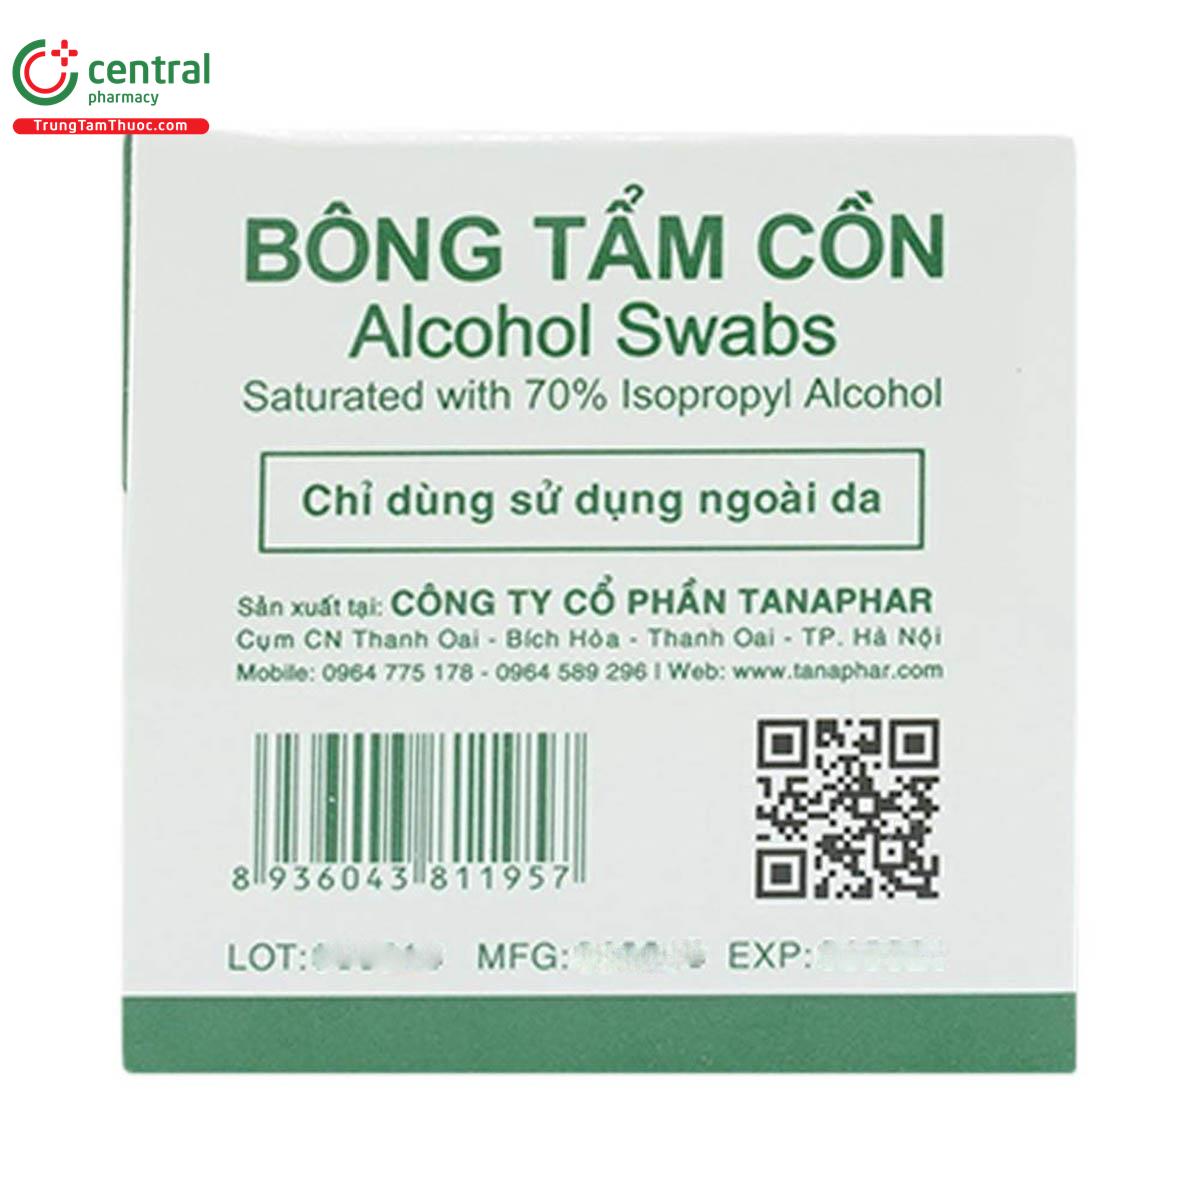 bong tam con alcohol swabs tanaphar 8 R7524